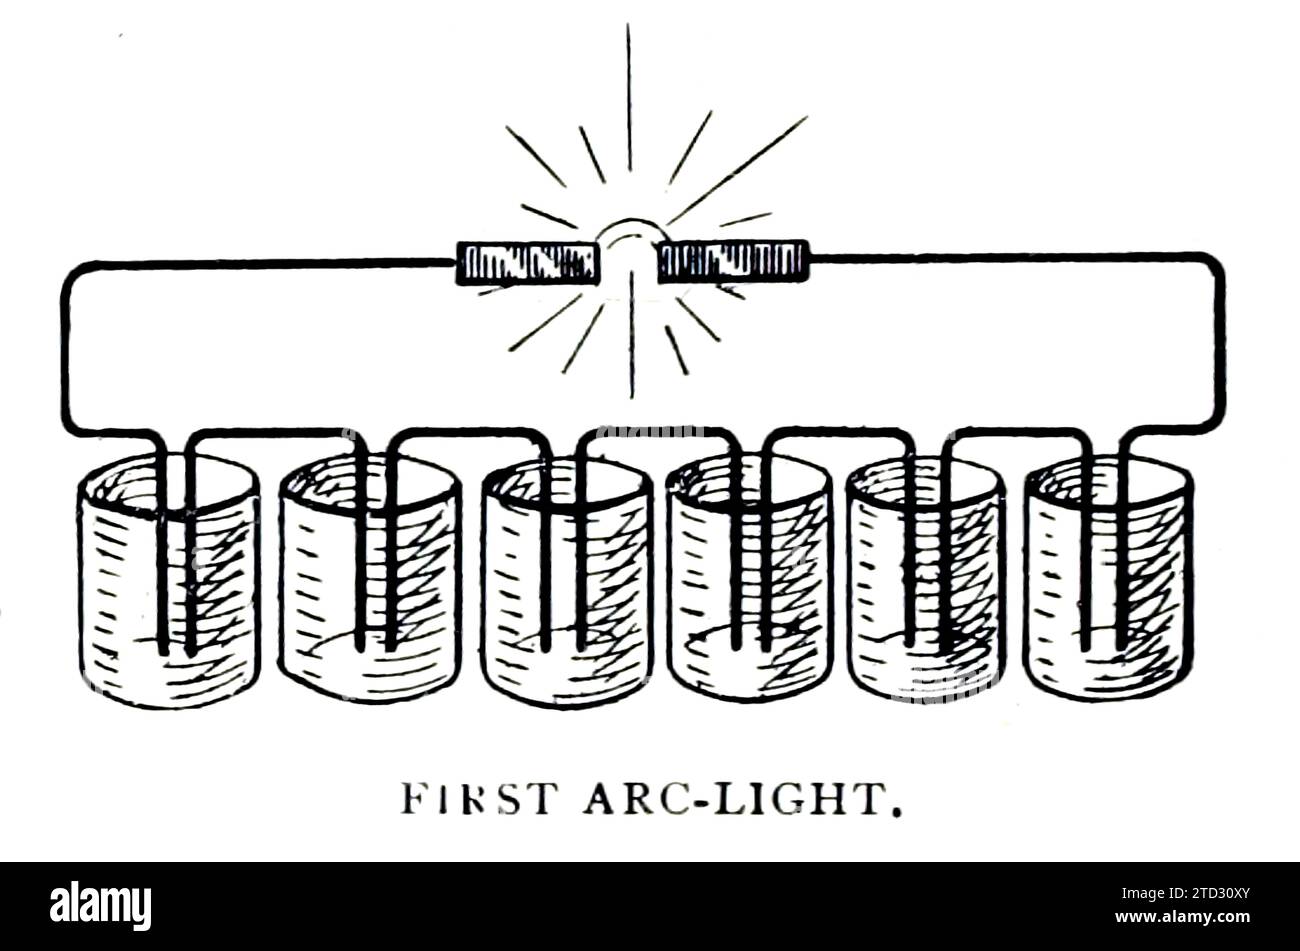 Immagine del primo arco luminoso alimentato a batteria. From 'Begnings and Future of the Arc Lamp' di S M Hamill, from the Engineering Magazine, volume VII, 1894. Foto Stock